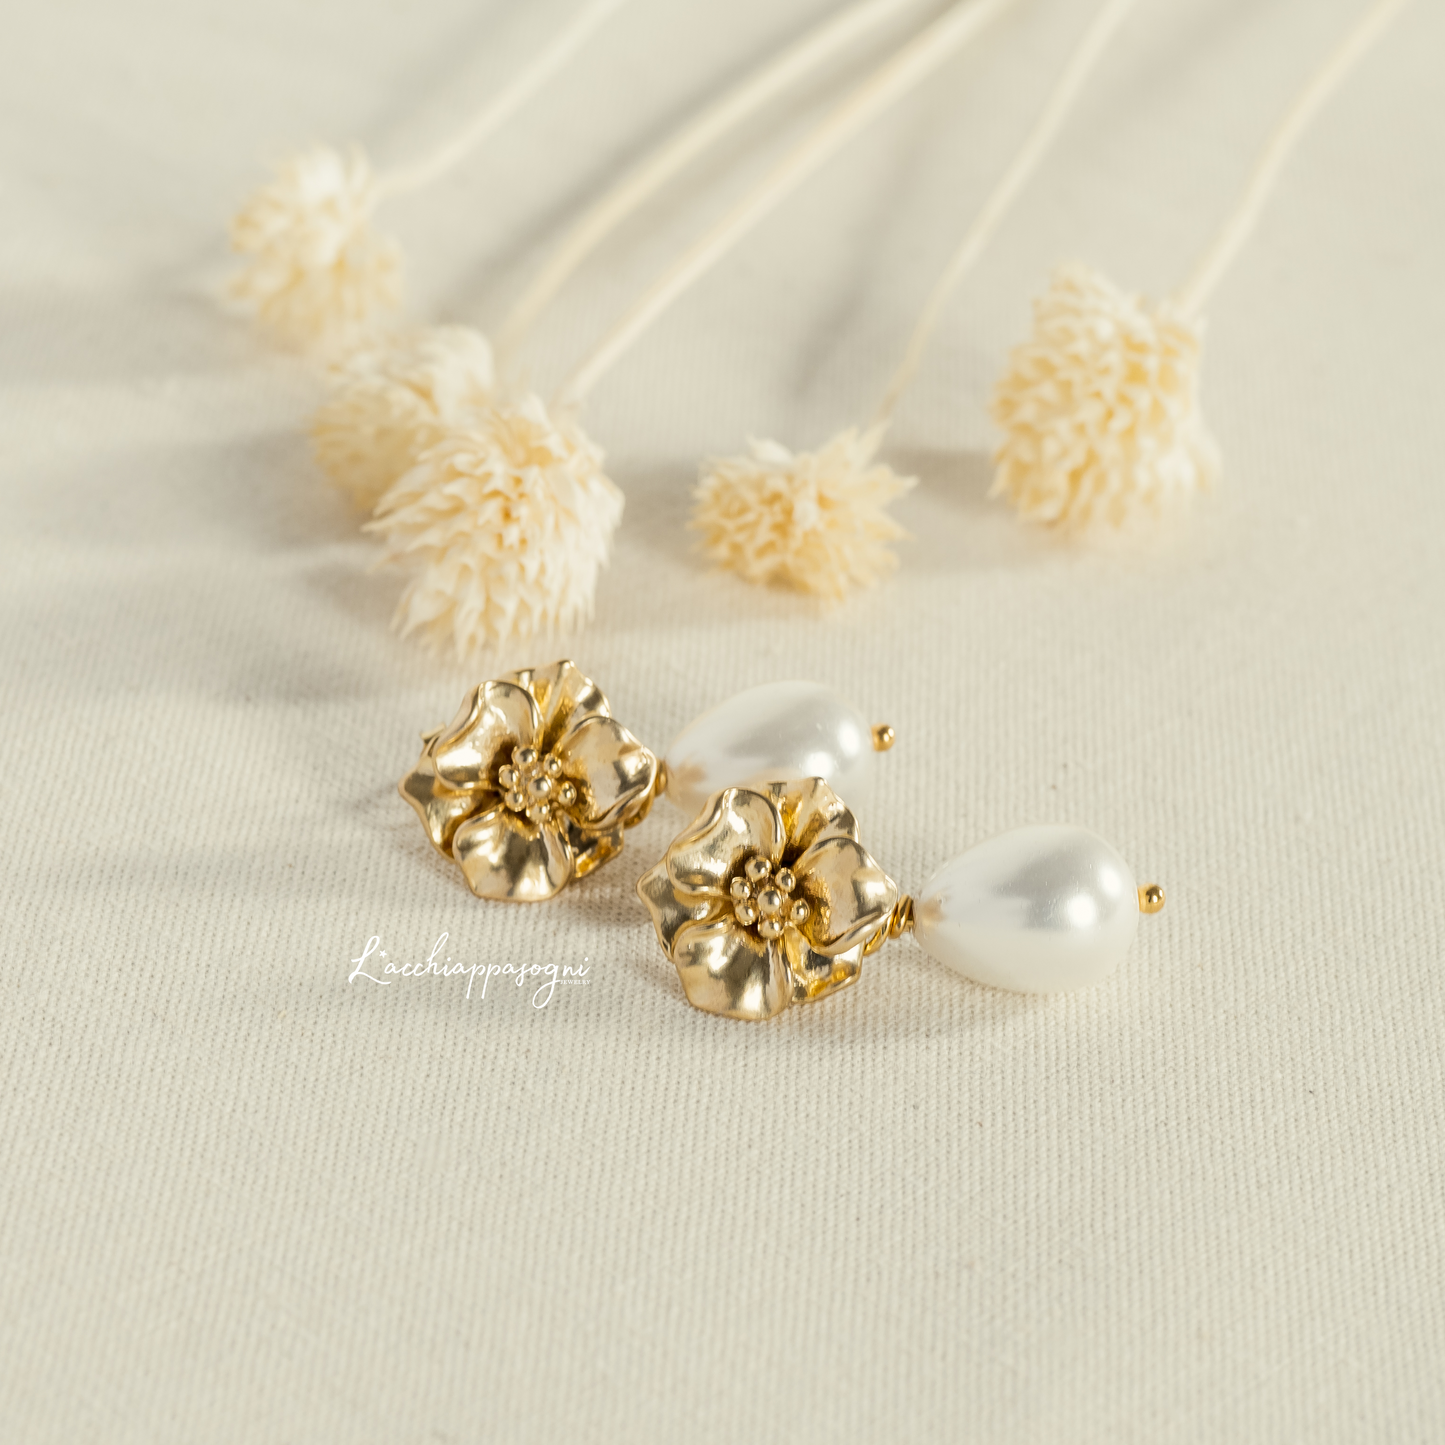 Orecchini floreali "Agatha" con perle